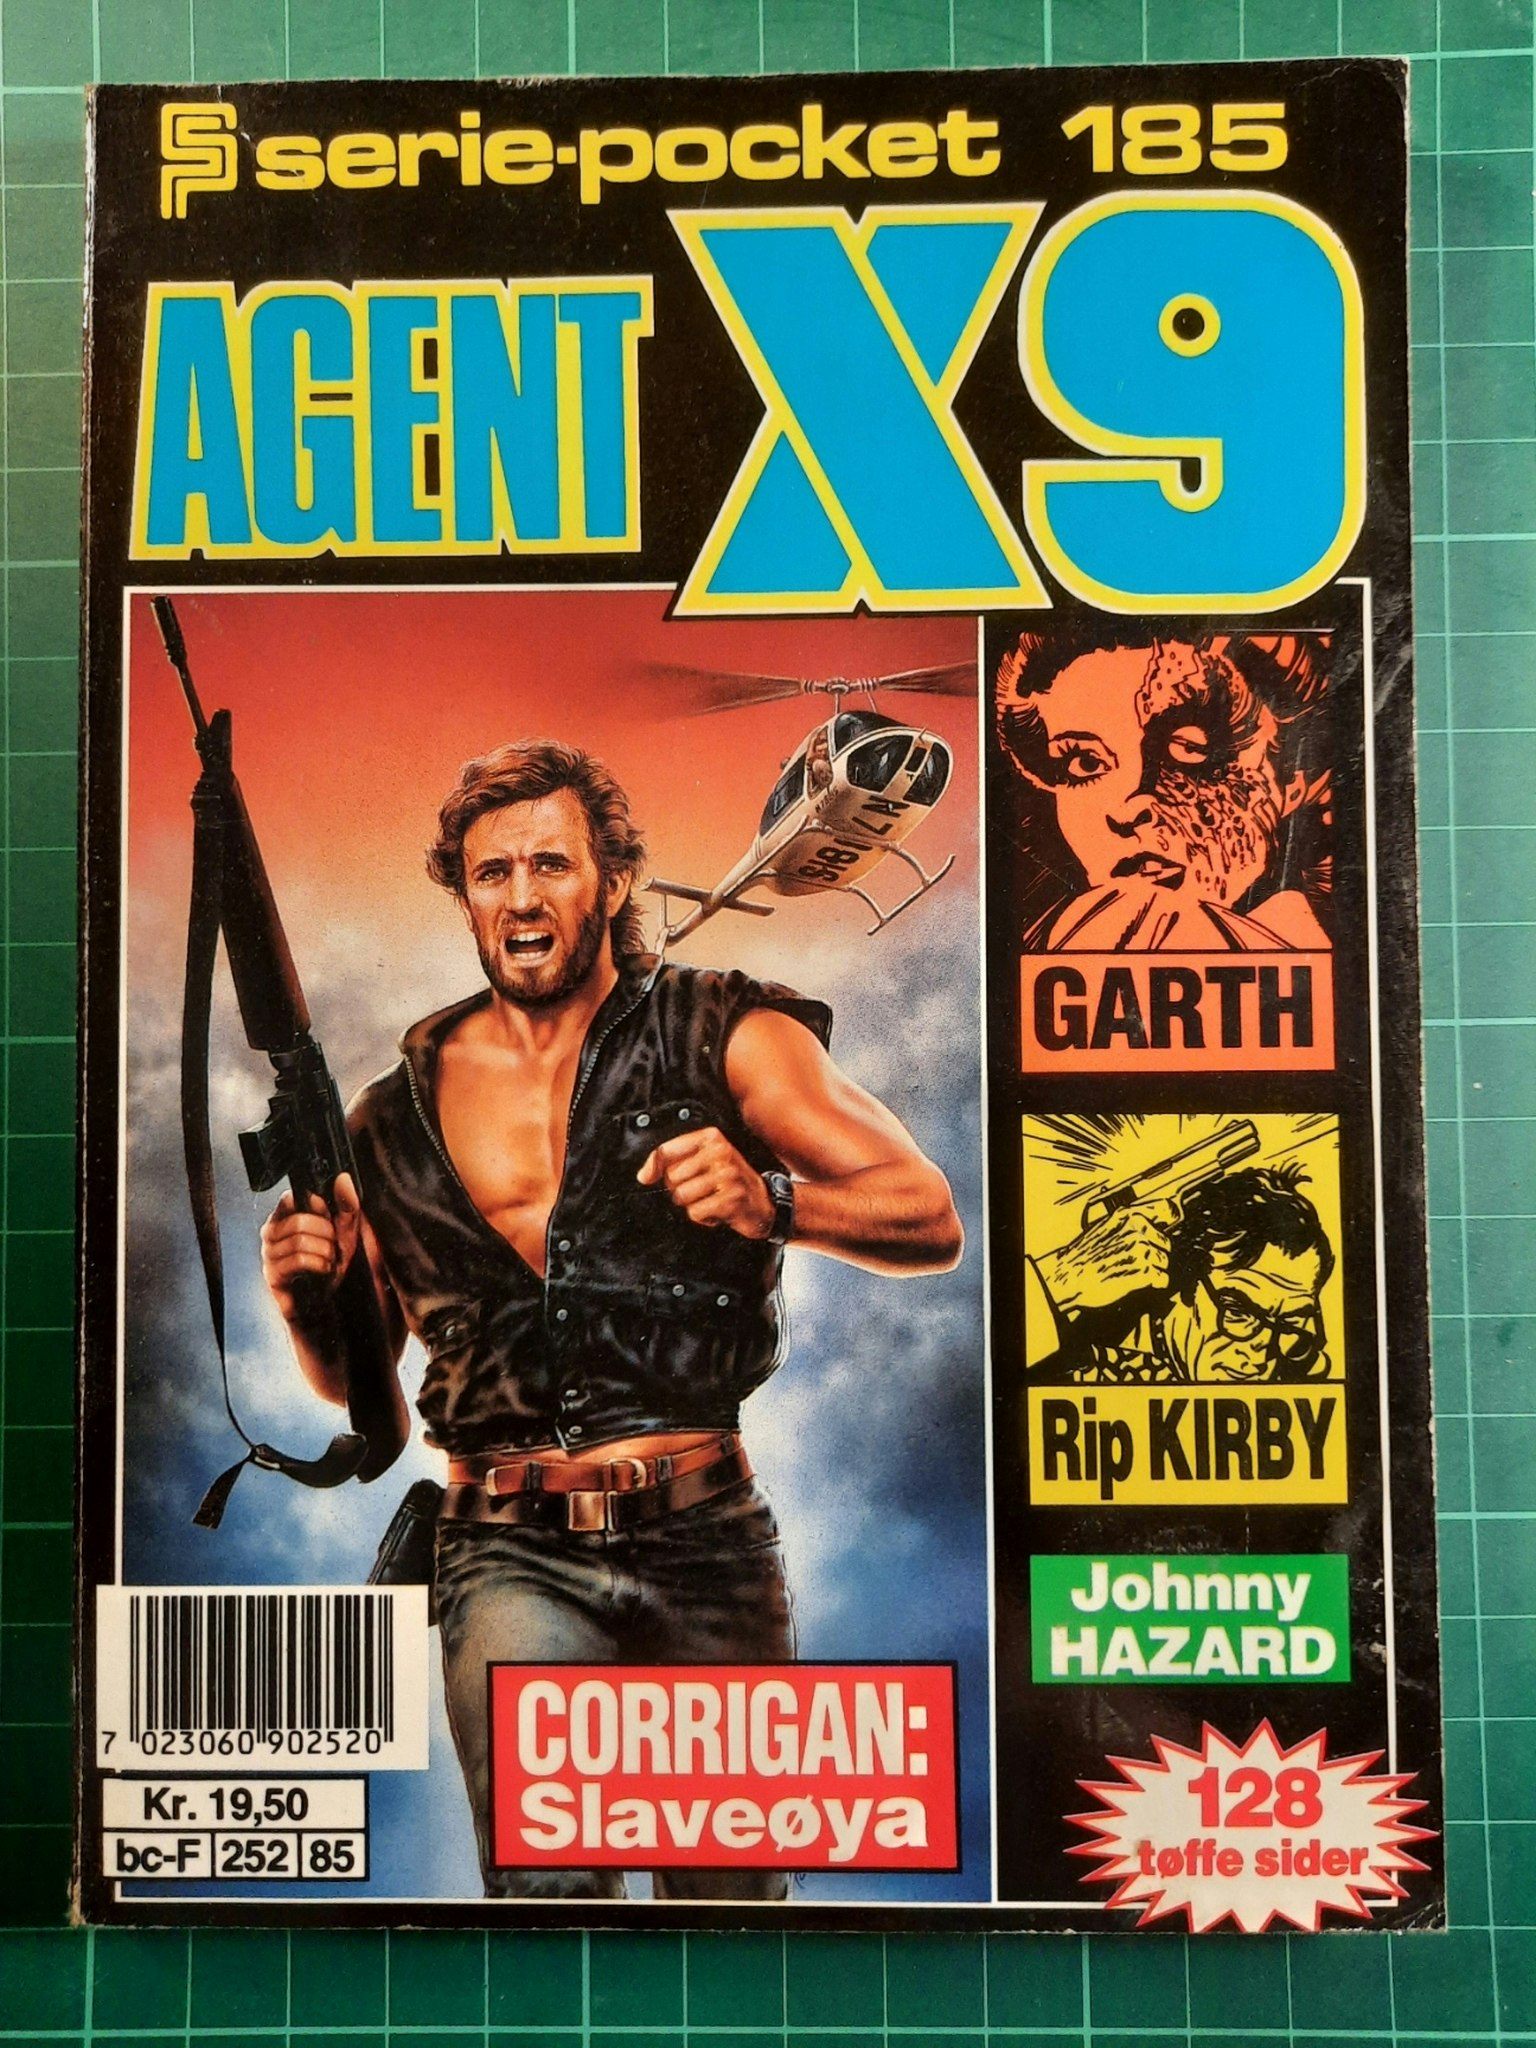 Serie-pocket 185 : Agent X9